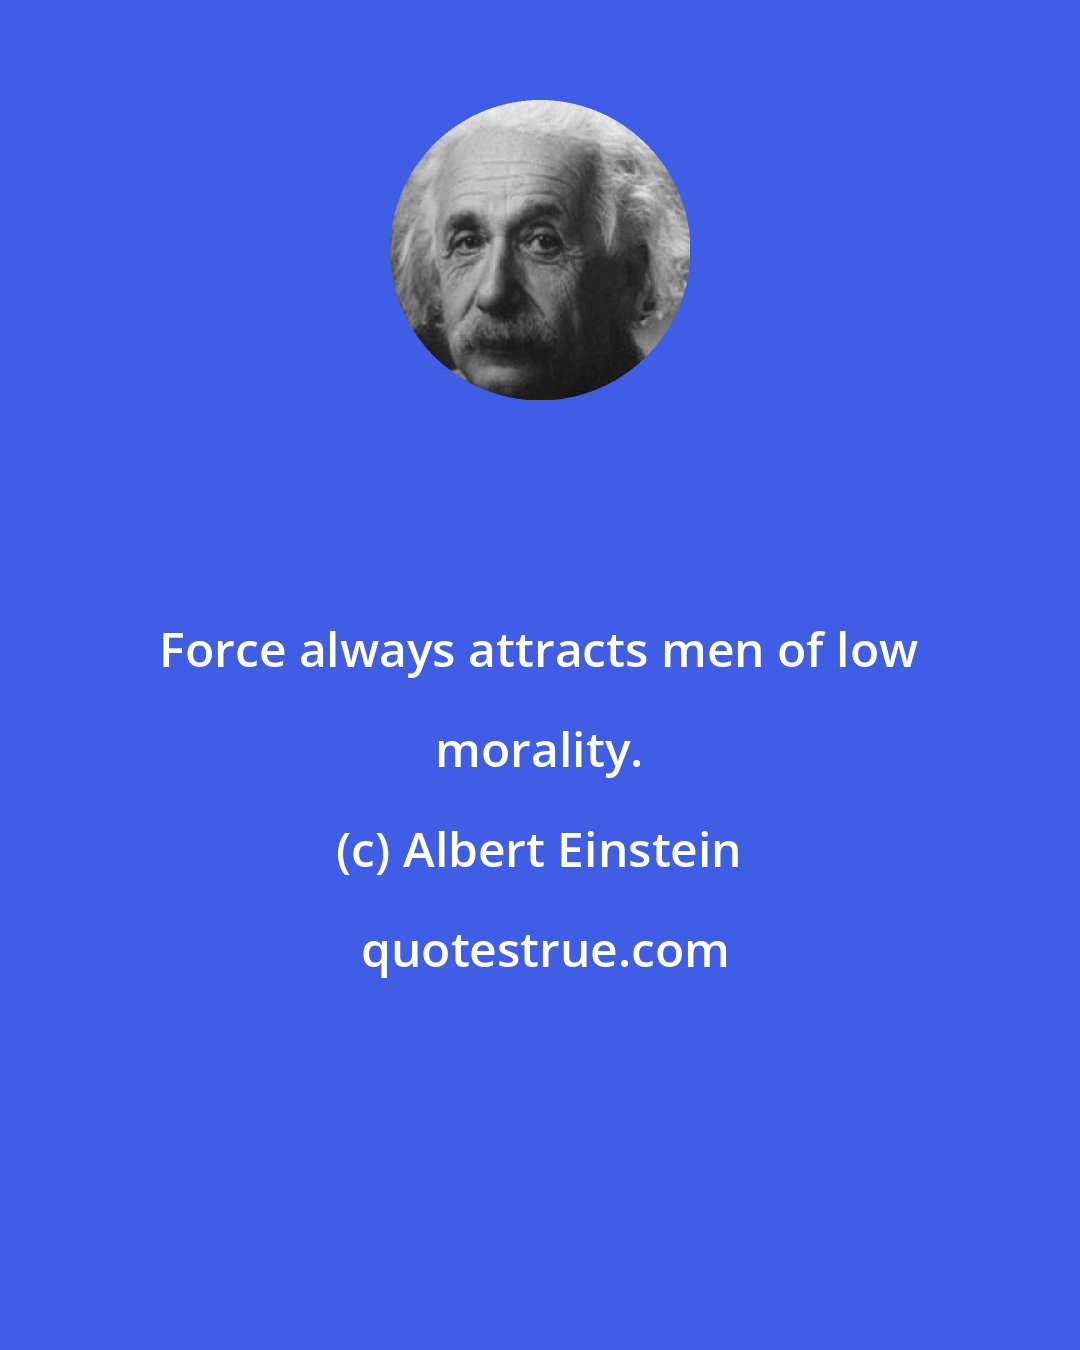 Albert Einstein: Force always attracts men of low morality.